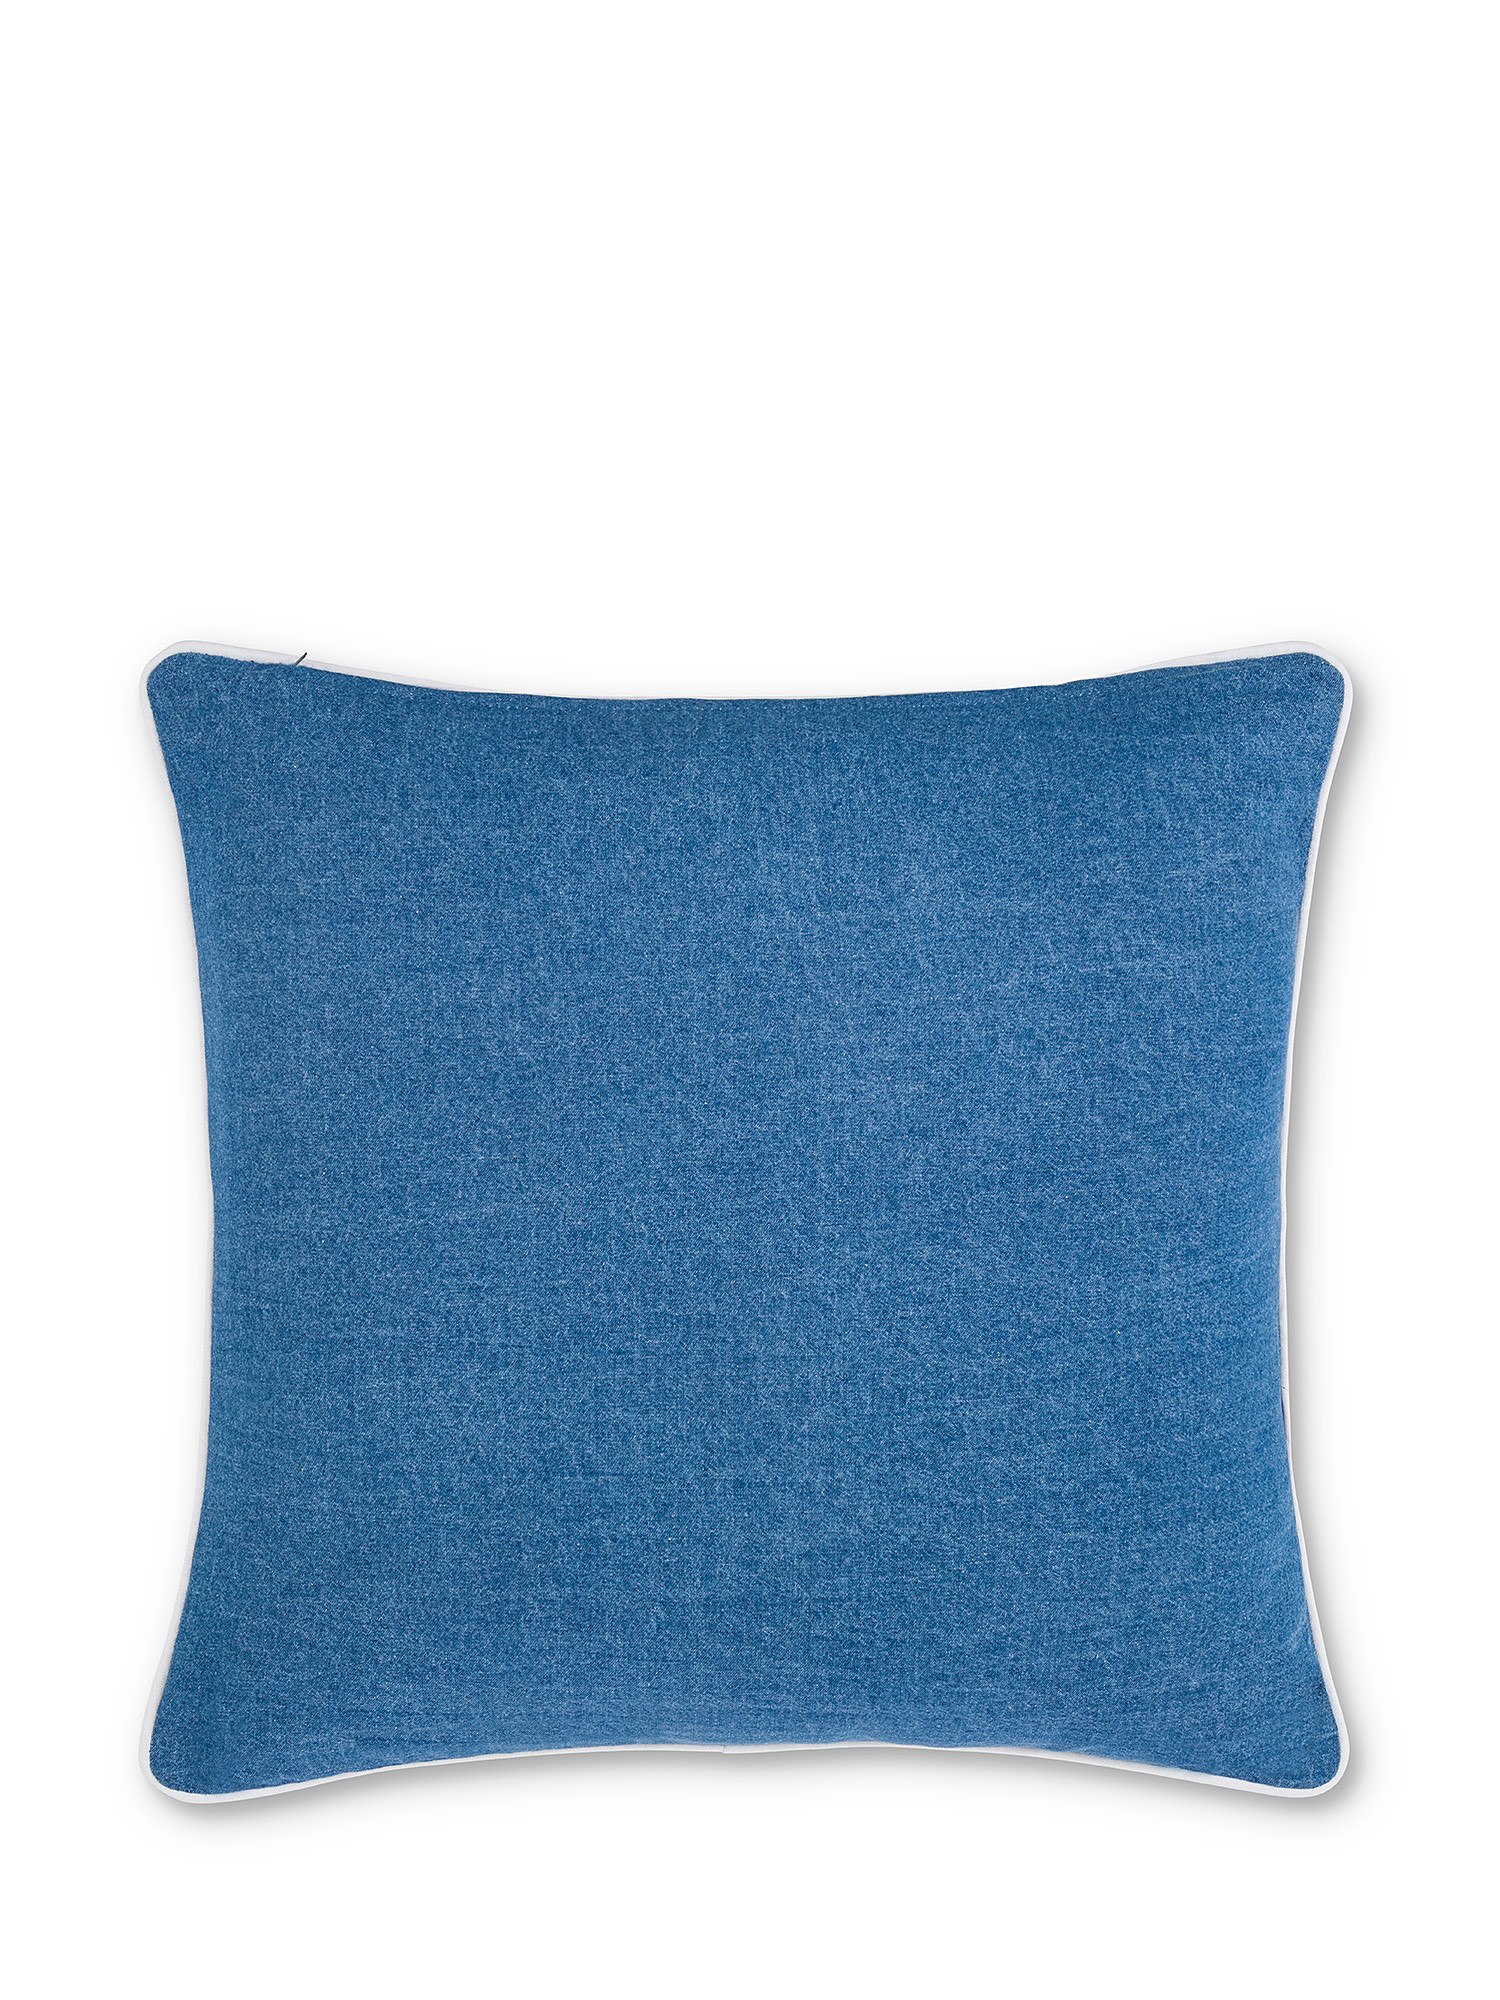 Cuscino tessuto denim 45x45cm, Azzurro, large image number 1